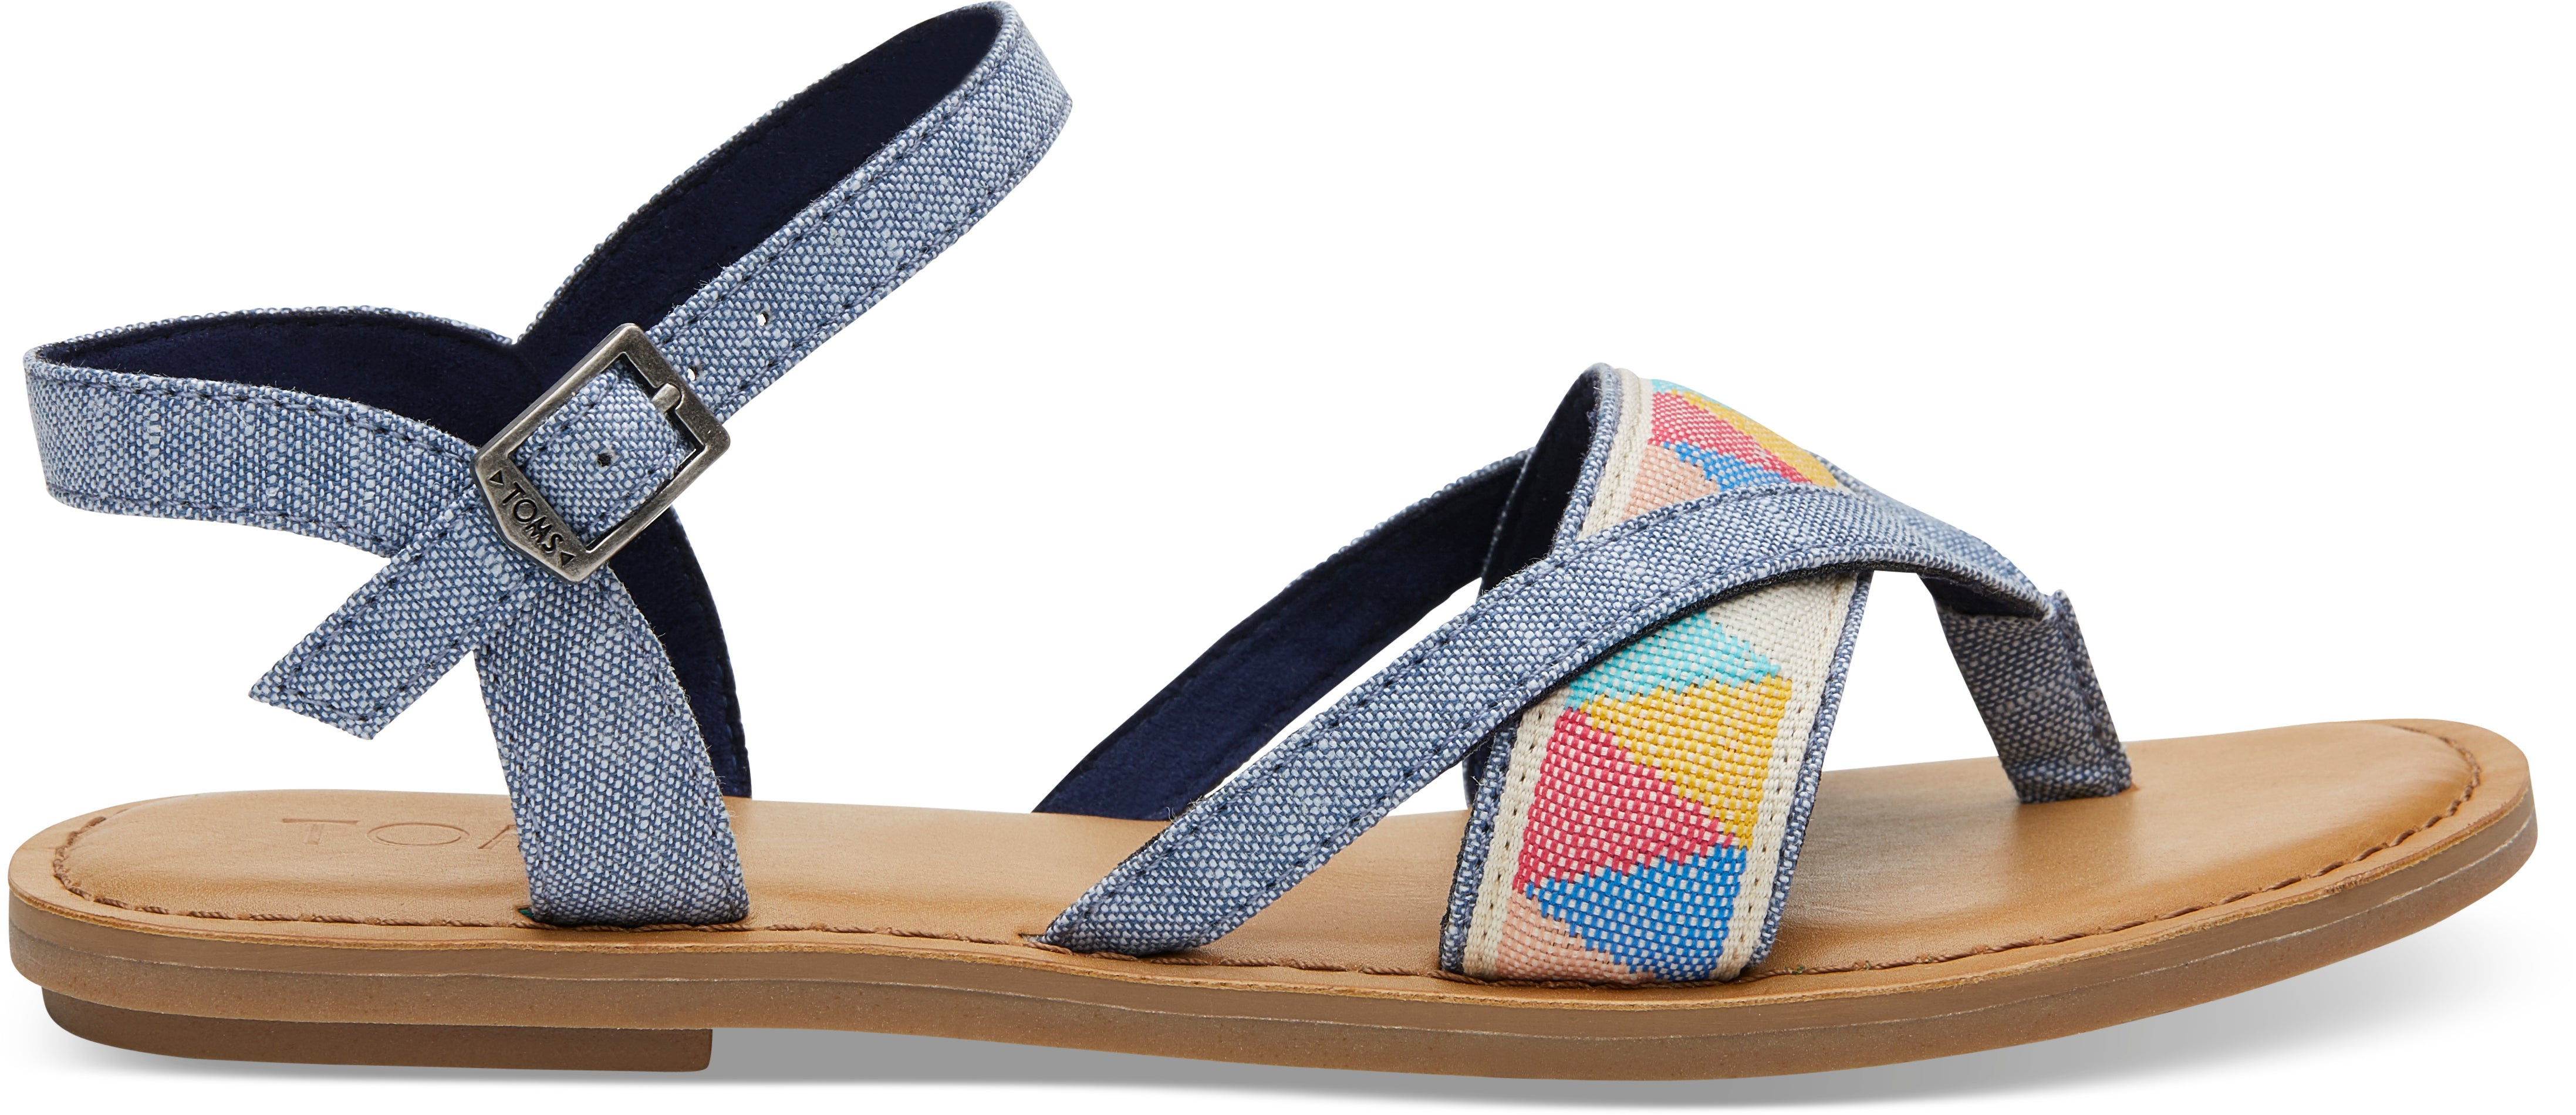 Dámské modré sandálky TOMS Chambray Tribal Lexie